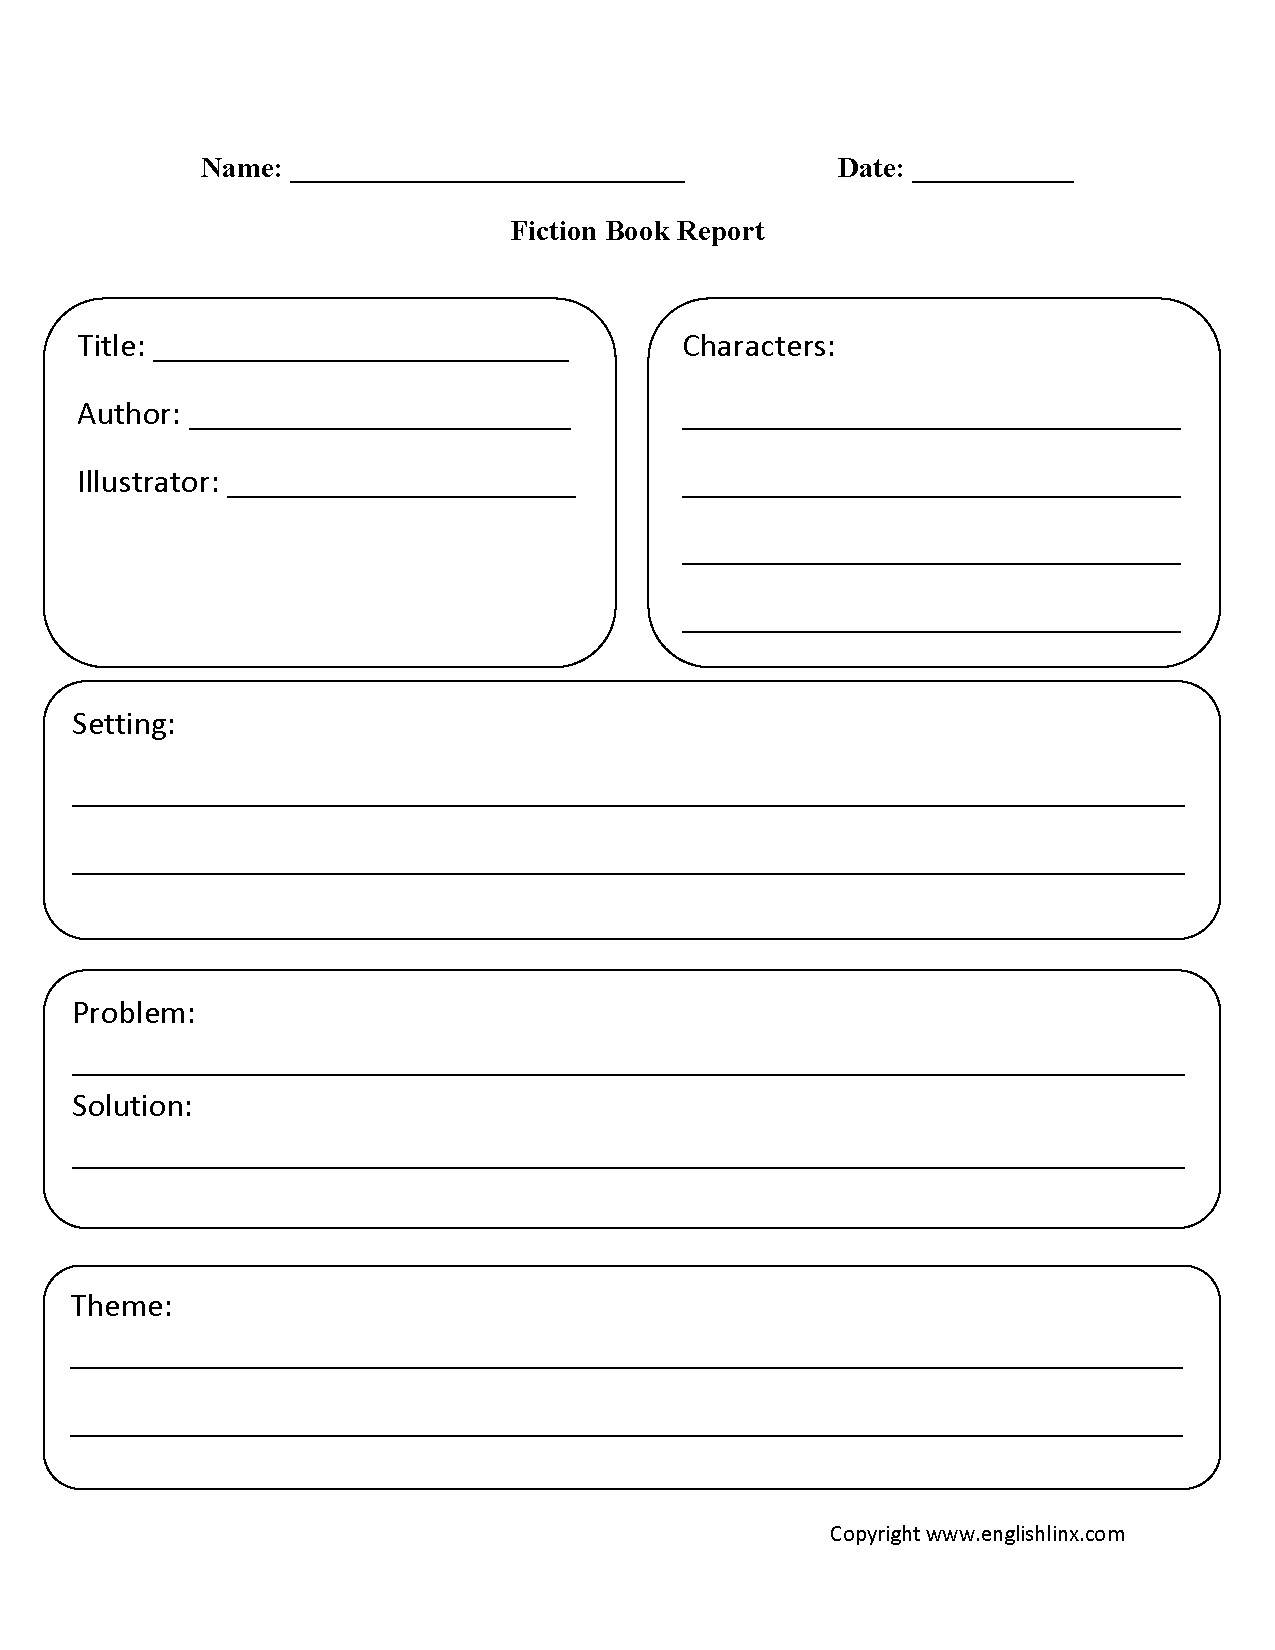 Fiction Book Report Worksheet homework